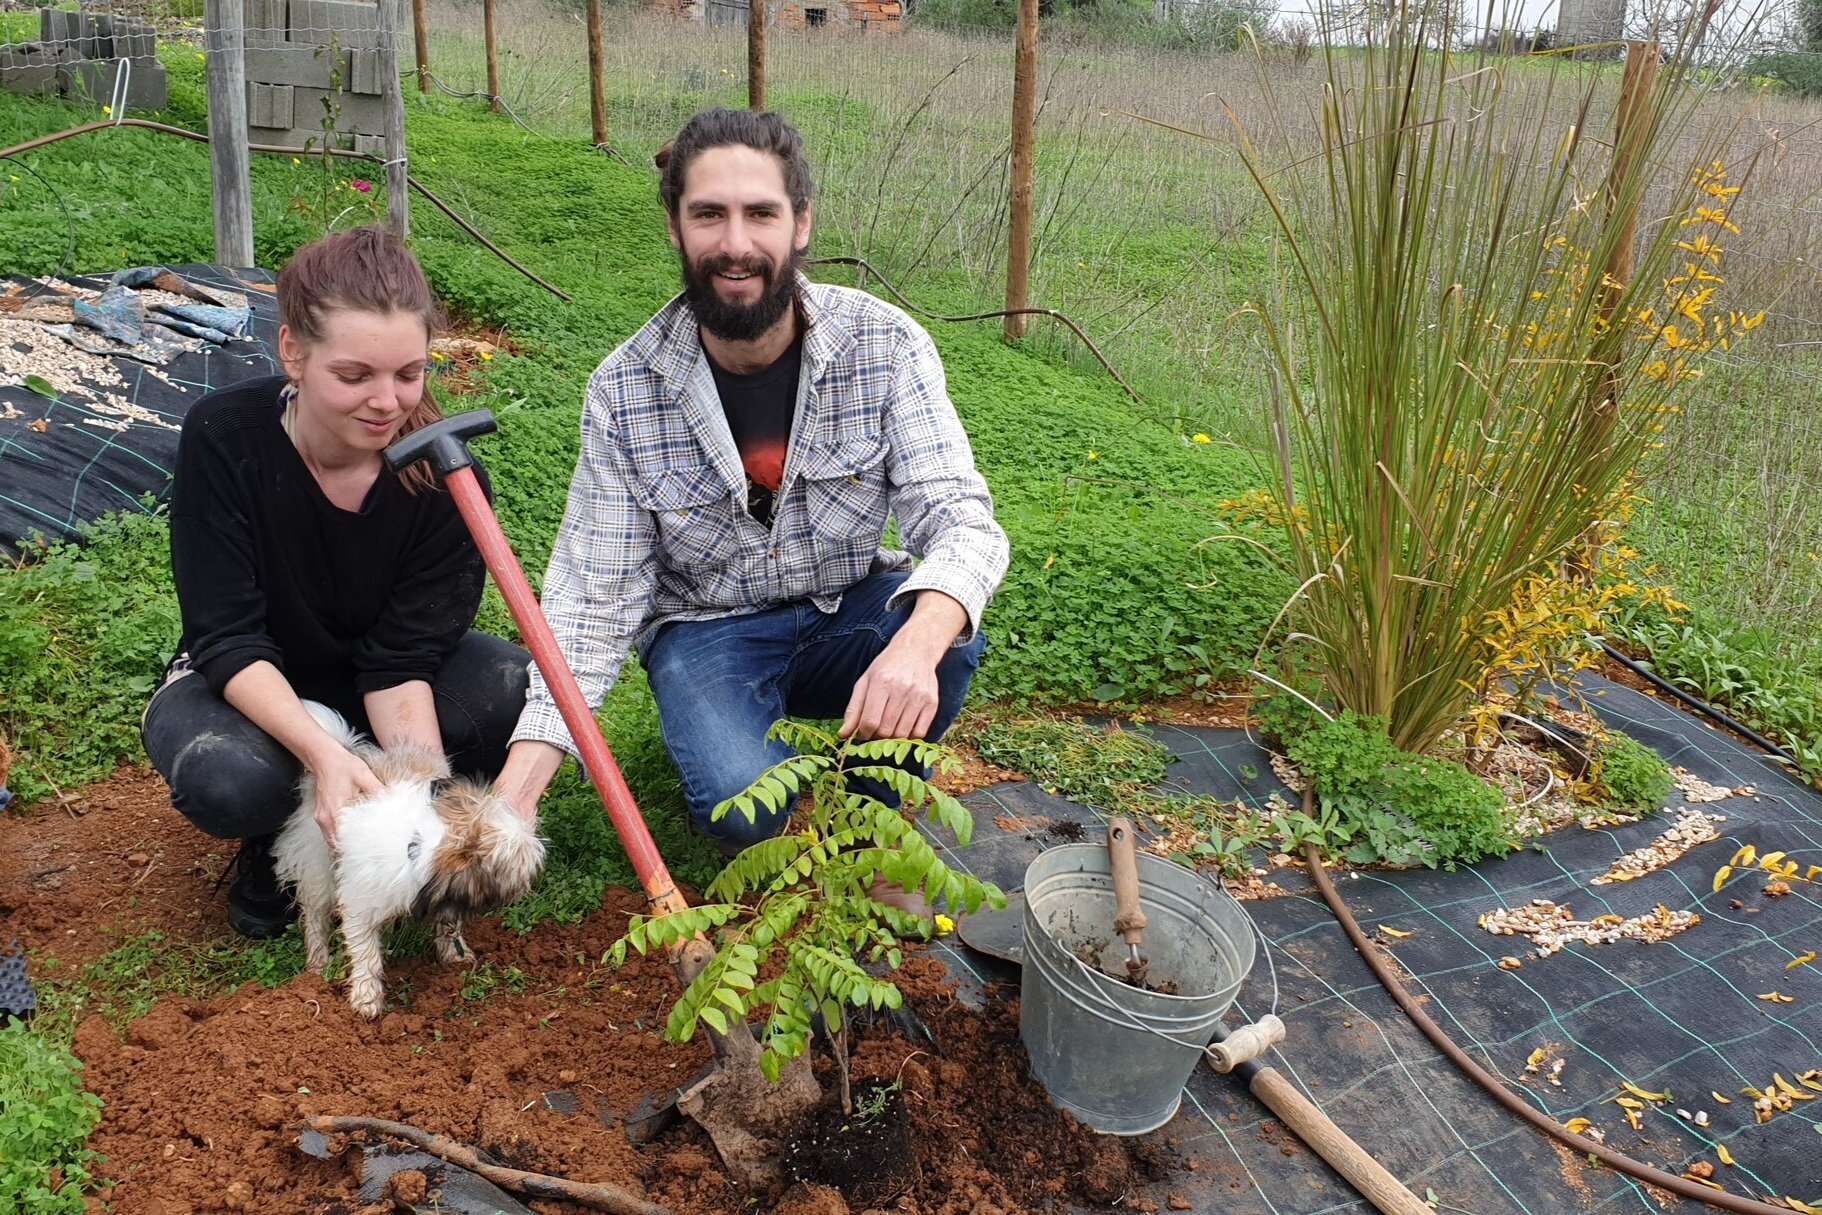 wwoofer from Australia planting a murraya koenigii